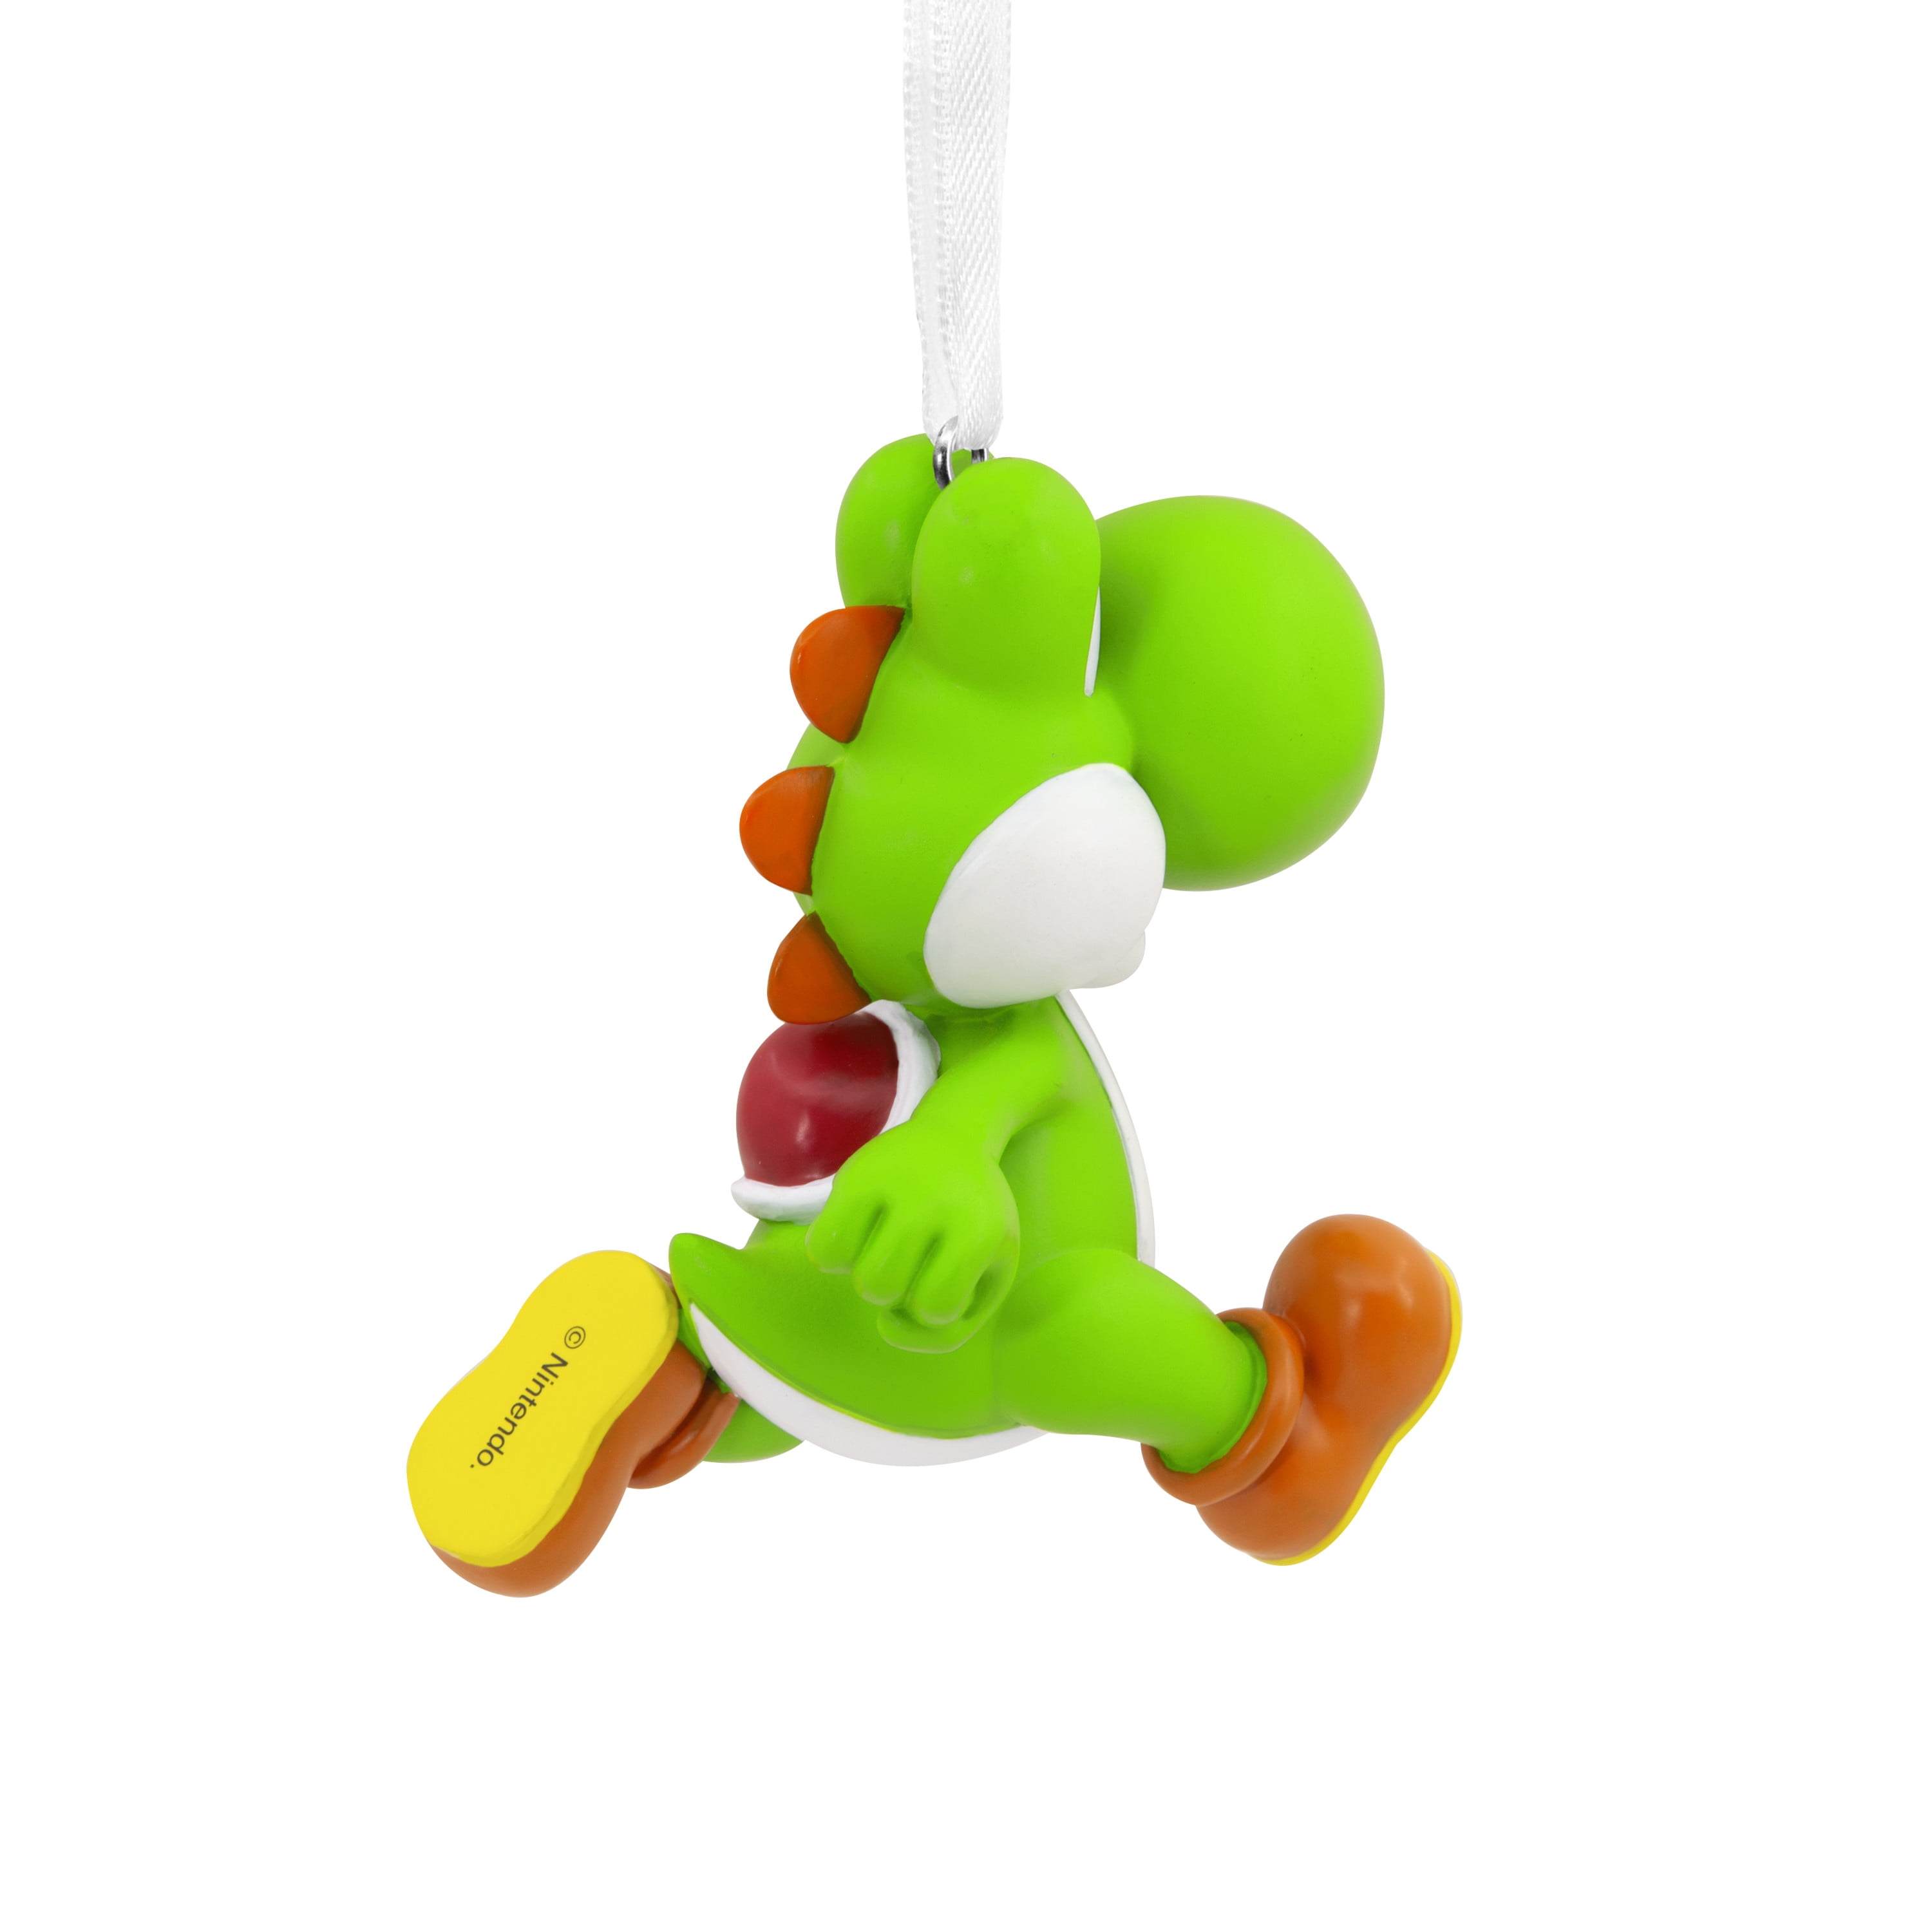 Buy Hallmark Ornament (Nintendo Super Mario Yoshi) Online at Lowest ...